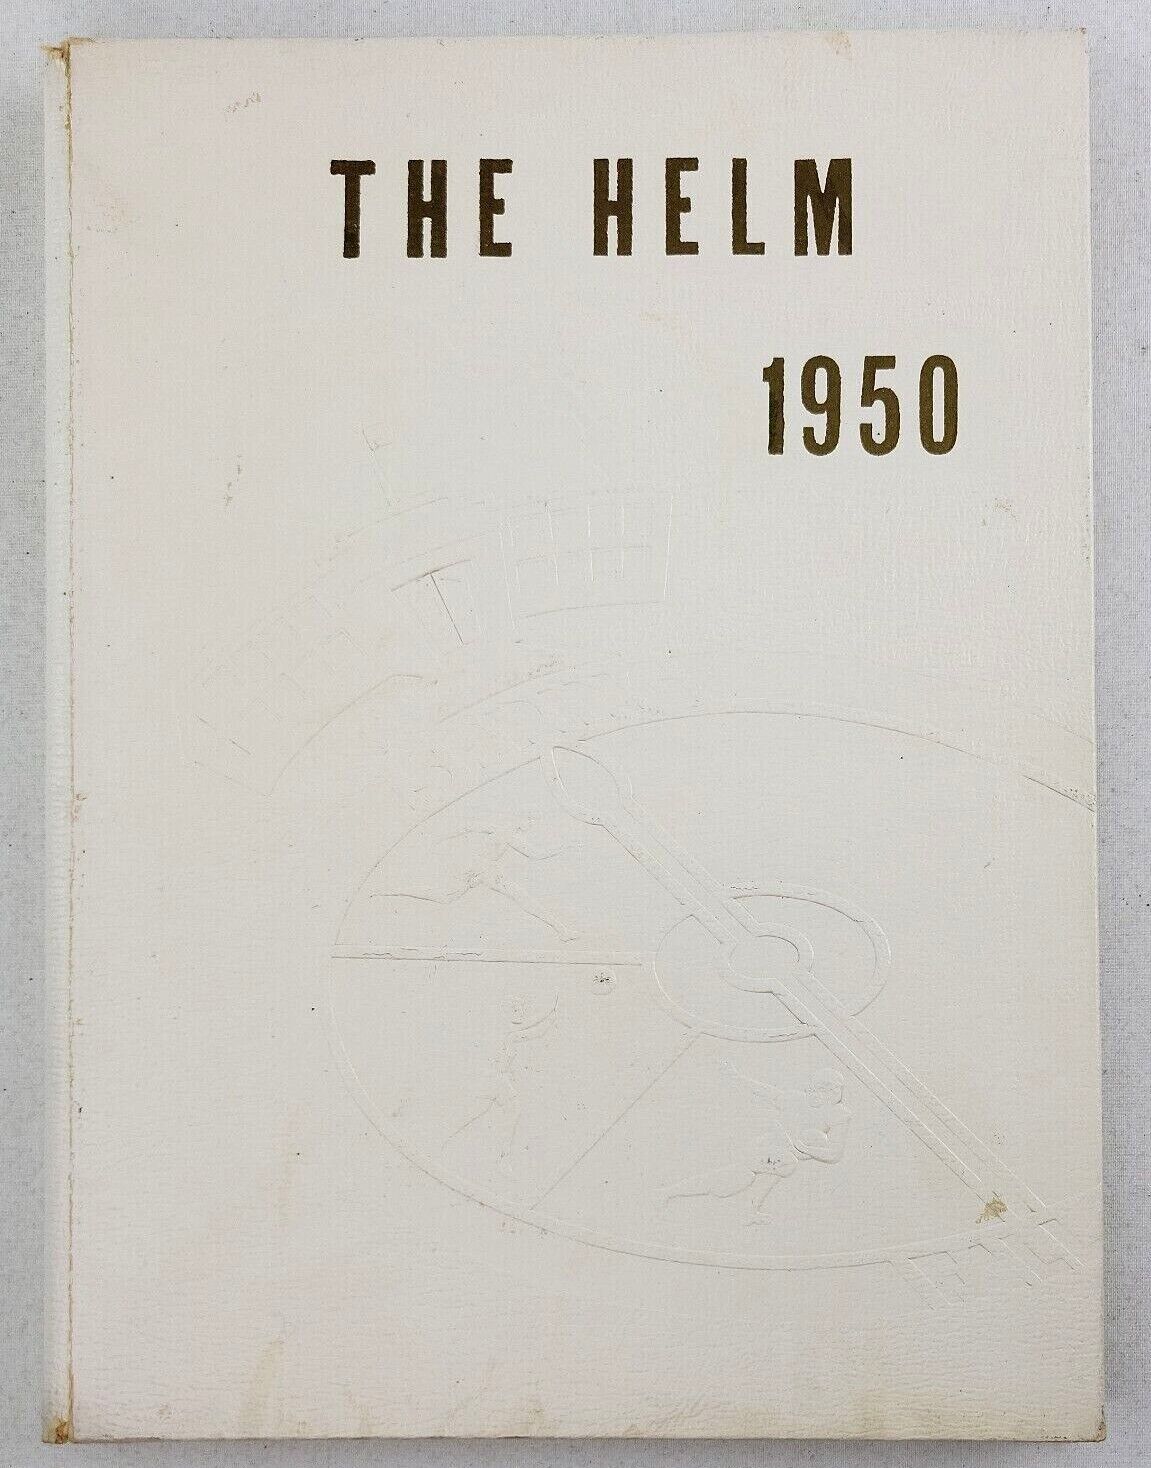 Harris Elmore School Yearbook 1950 The Helm Grades 1 thru 12 Ohio Annual